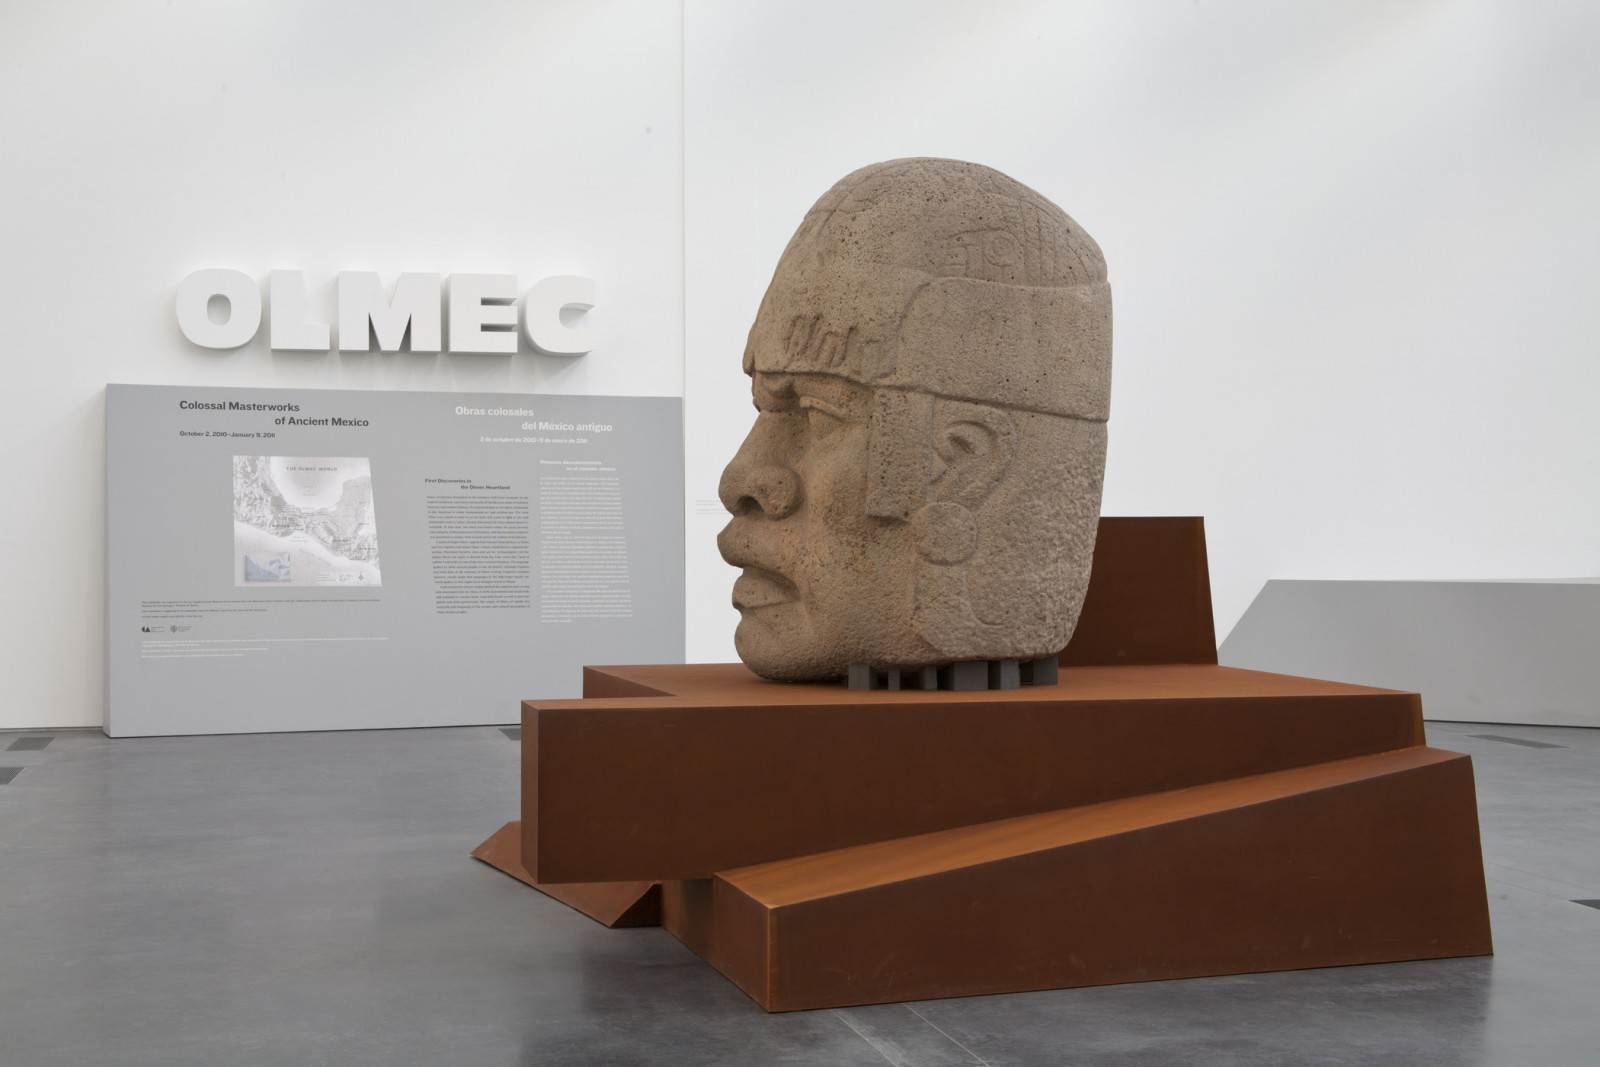 Install Shot: Olmec: Colossal Masterworks of Ancient Mexico